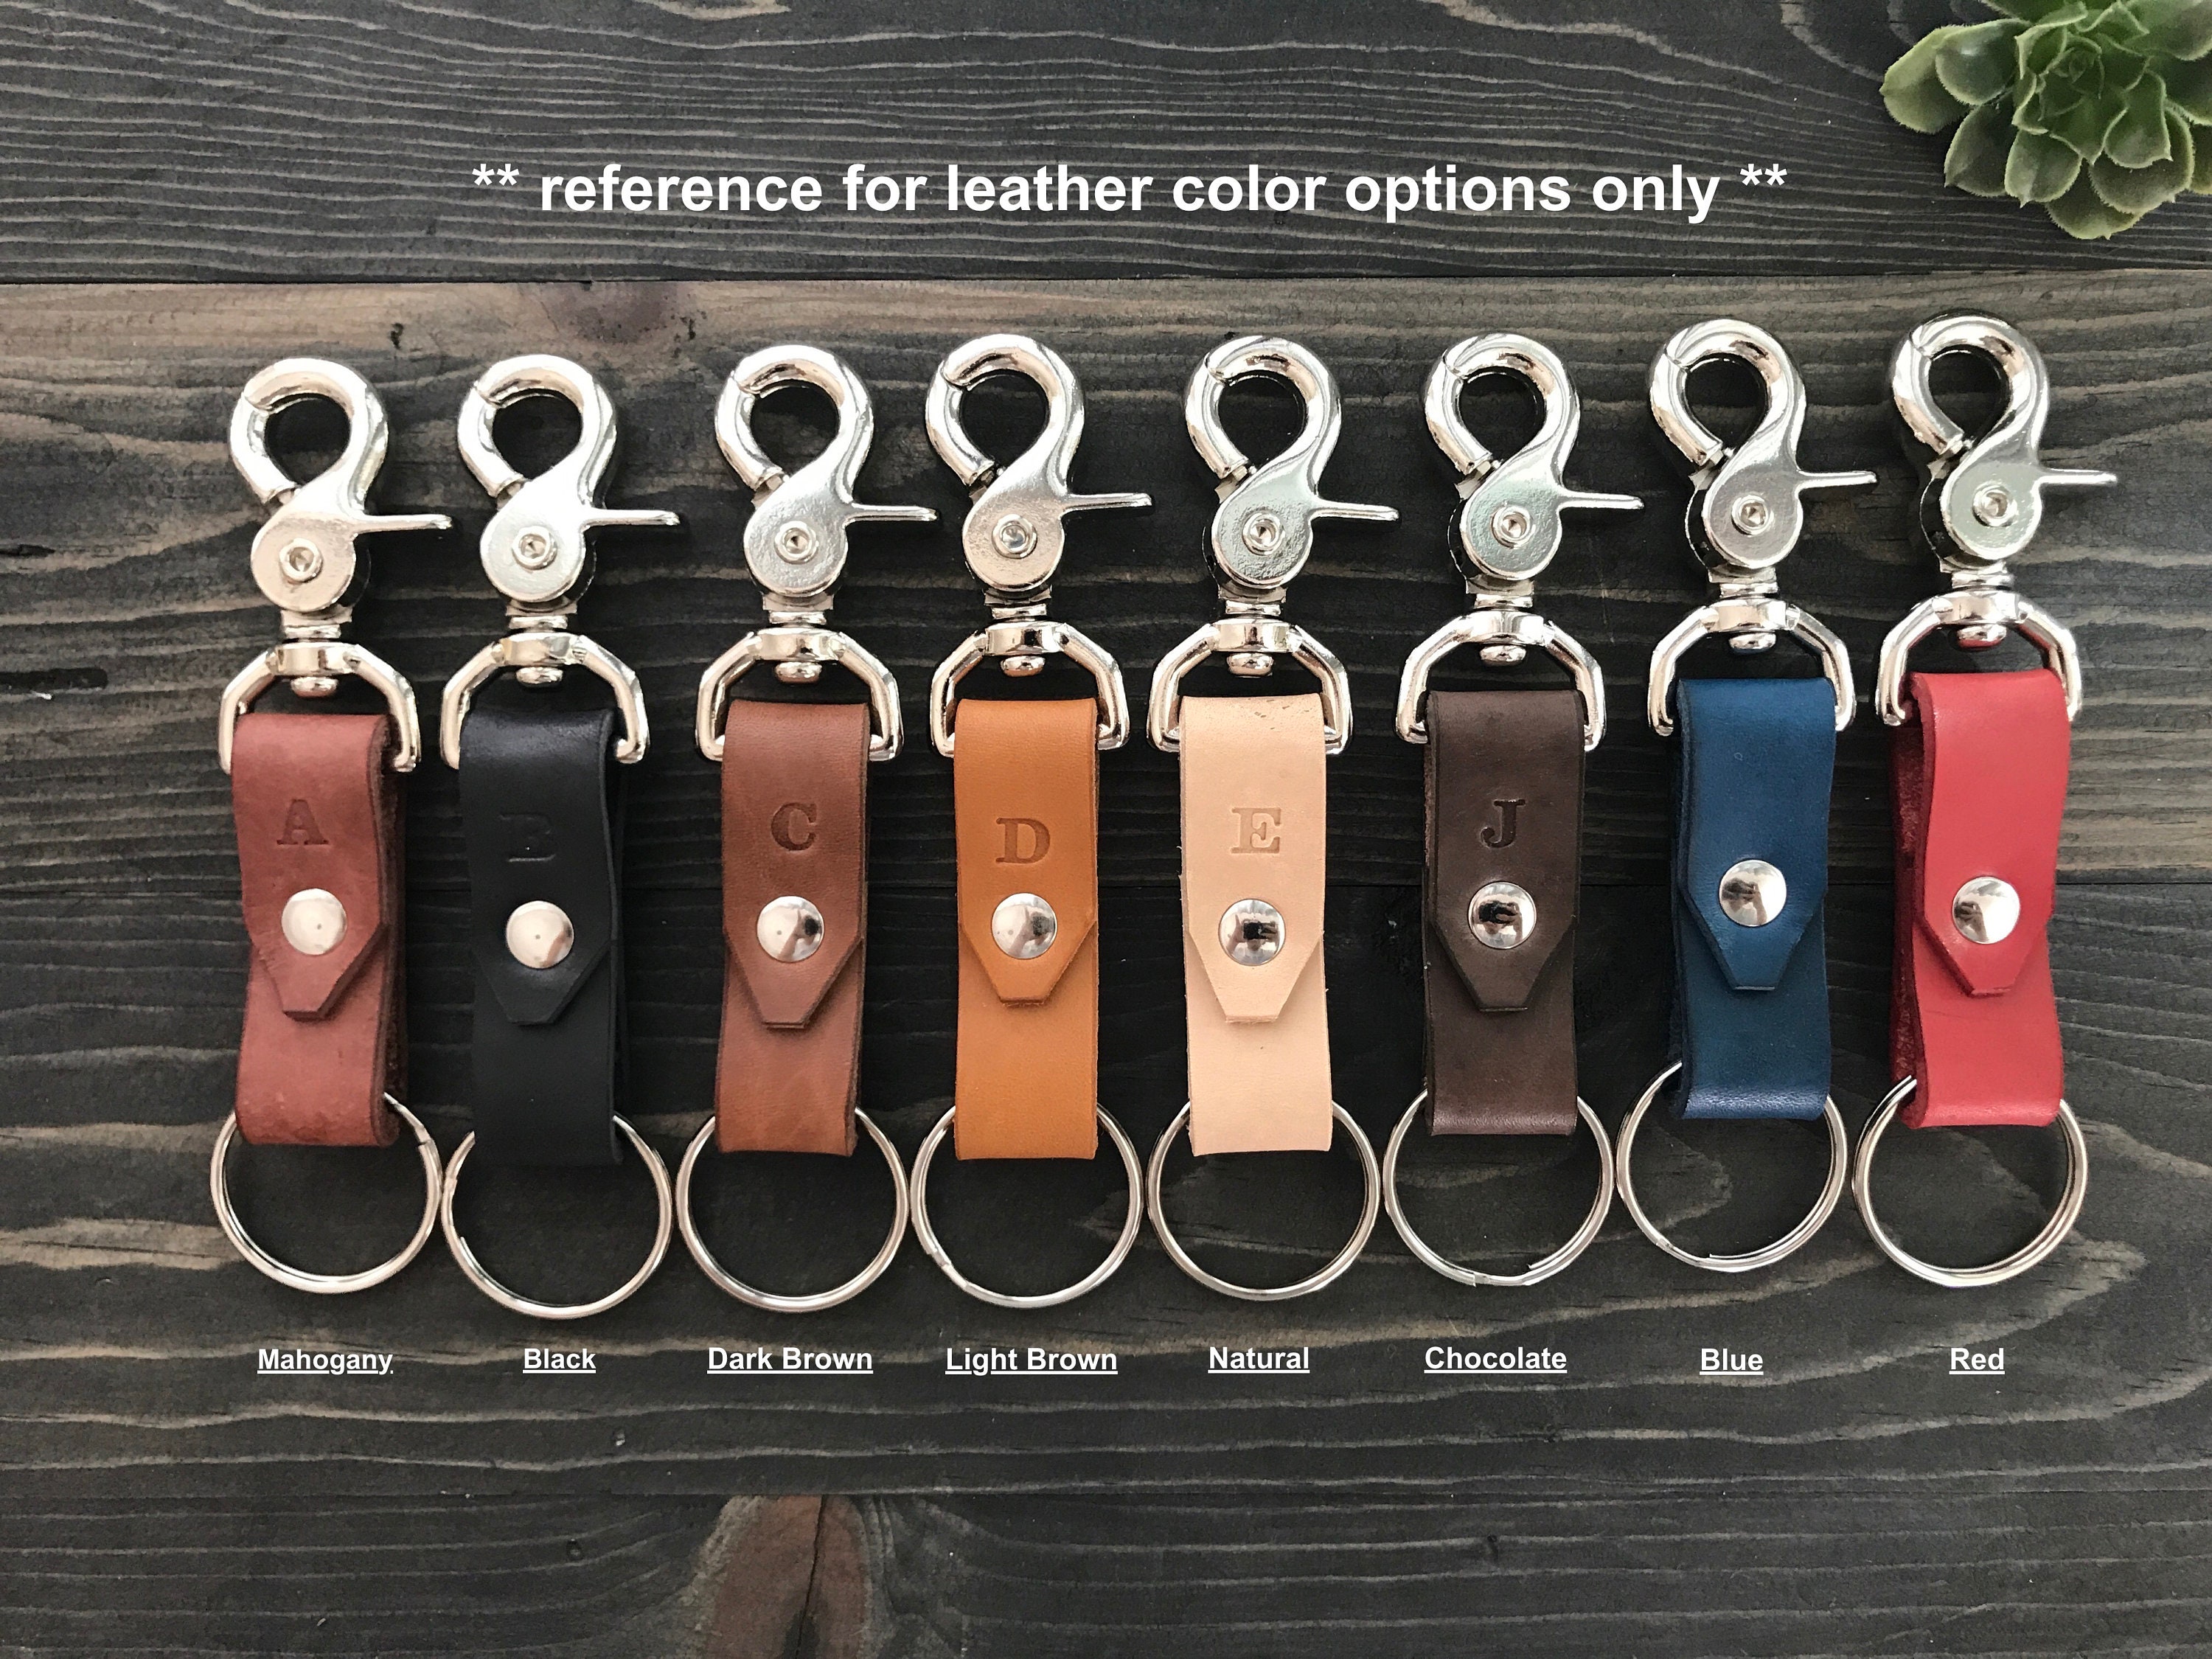 Casco leather EDC key organizer | Rouxco Leather